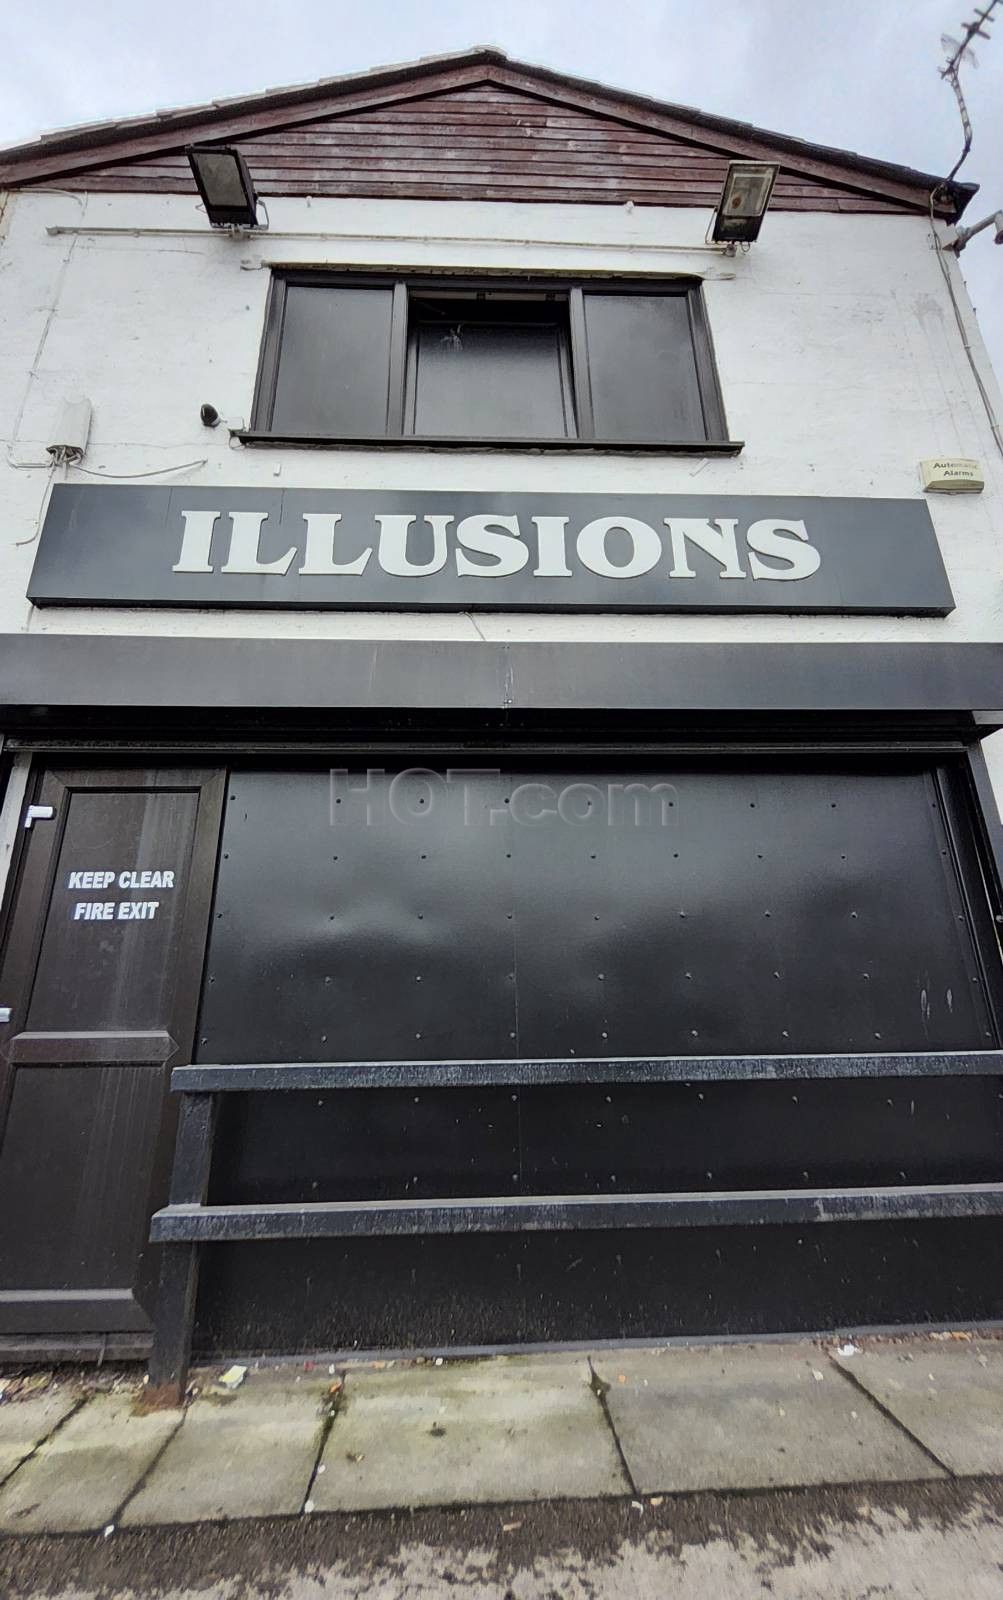 Bolton, England Illusions